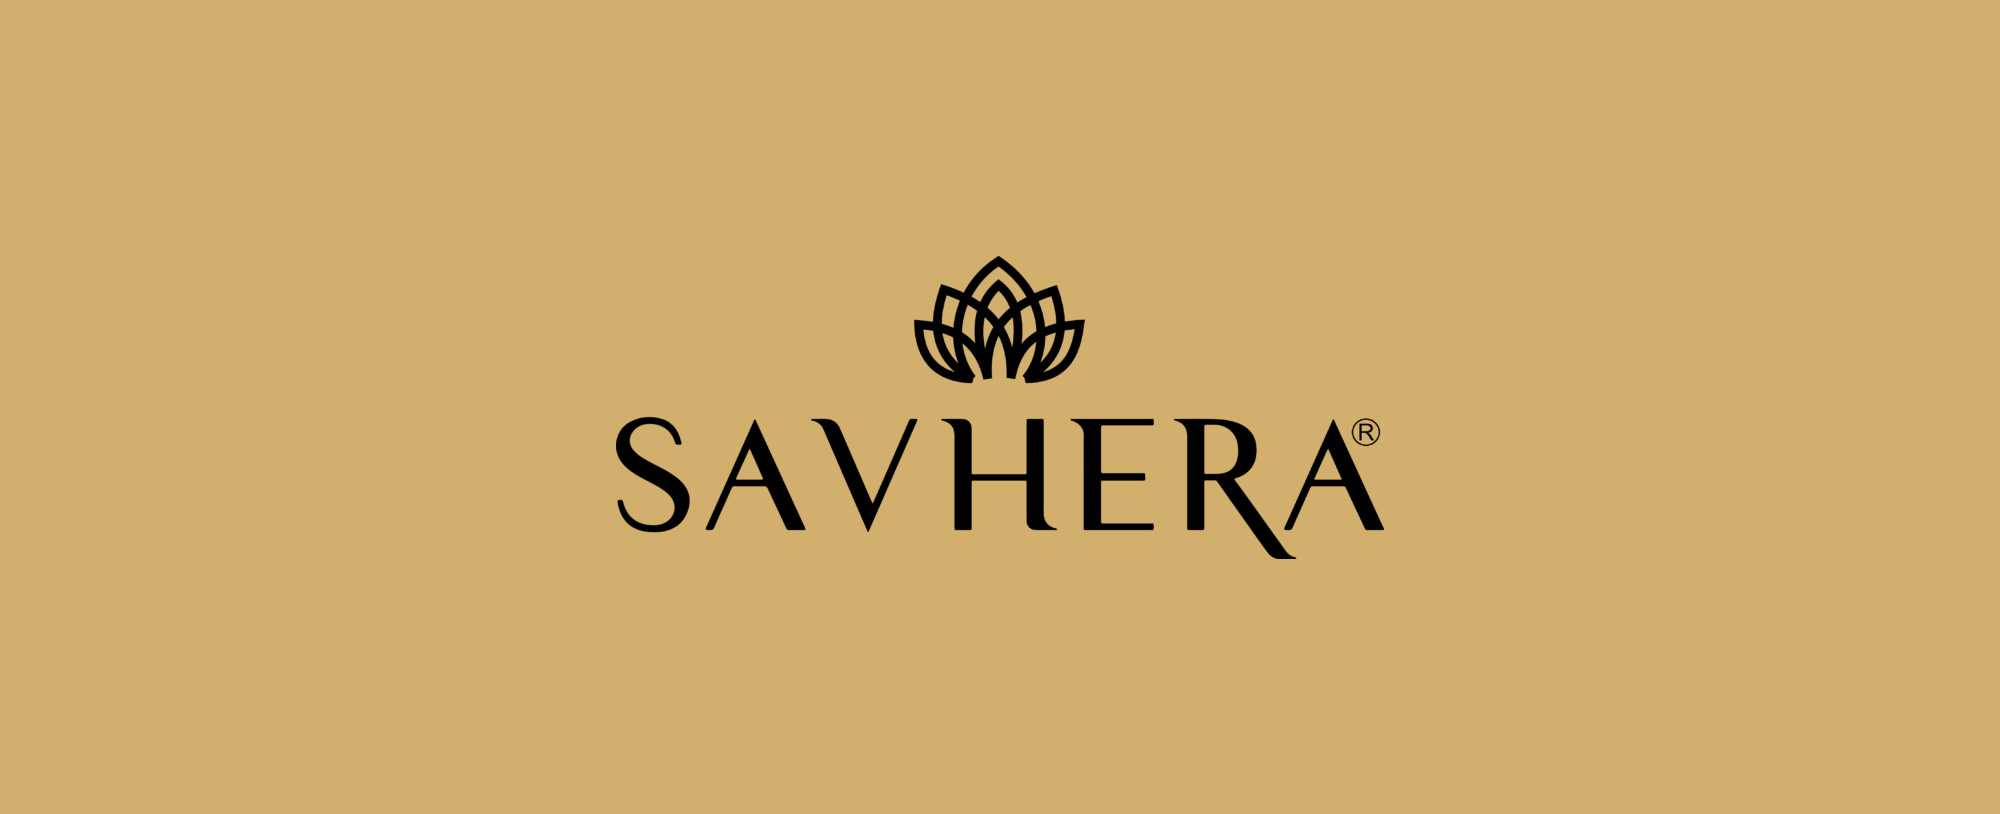 savhera-logo